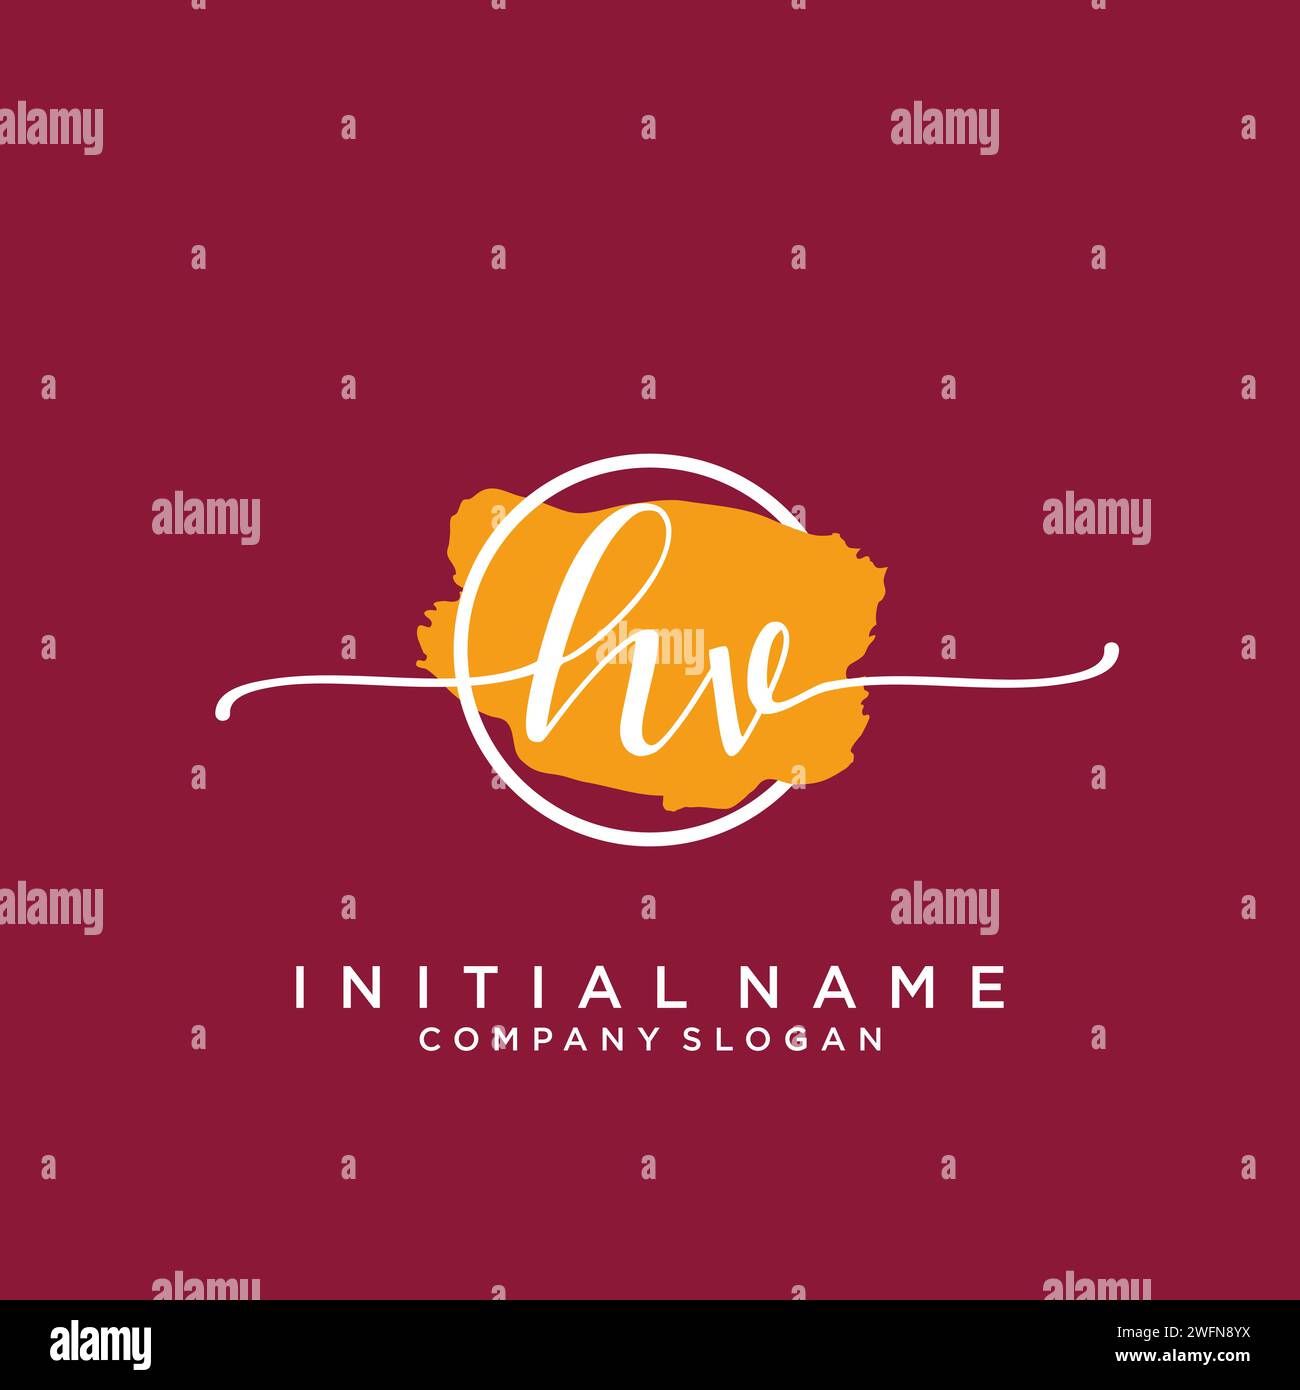 HV Initial handwriting logo with circle Stock Vector